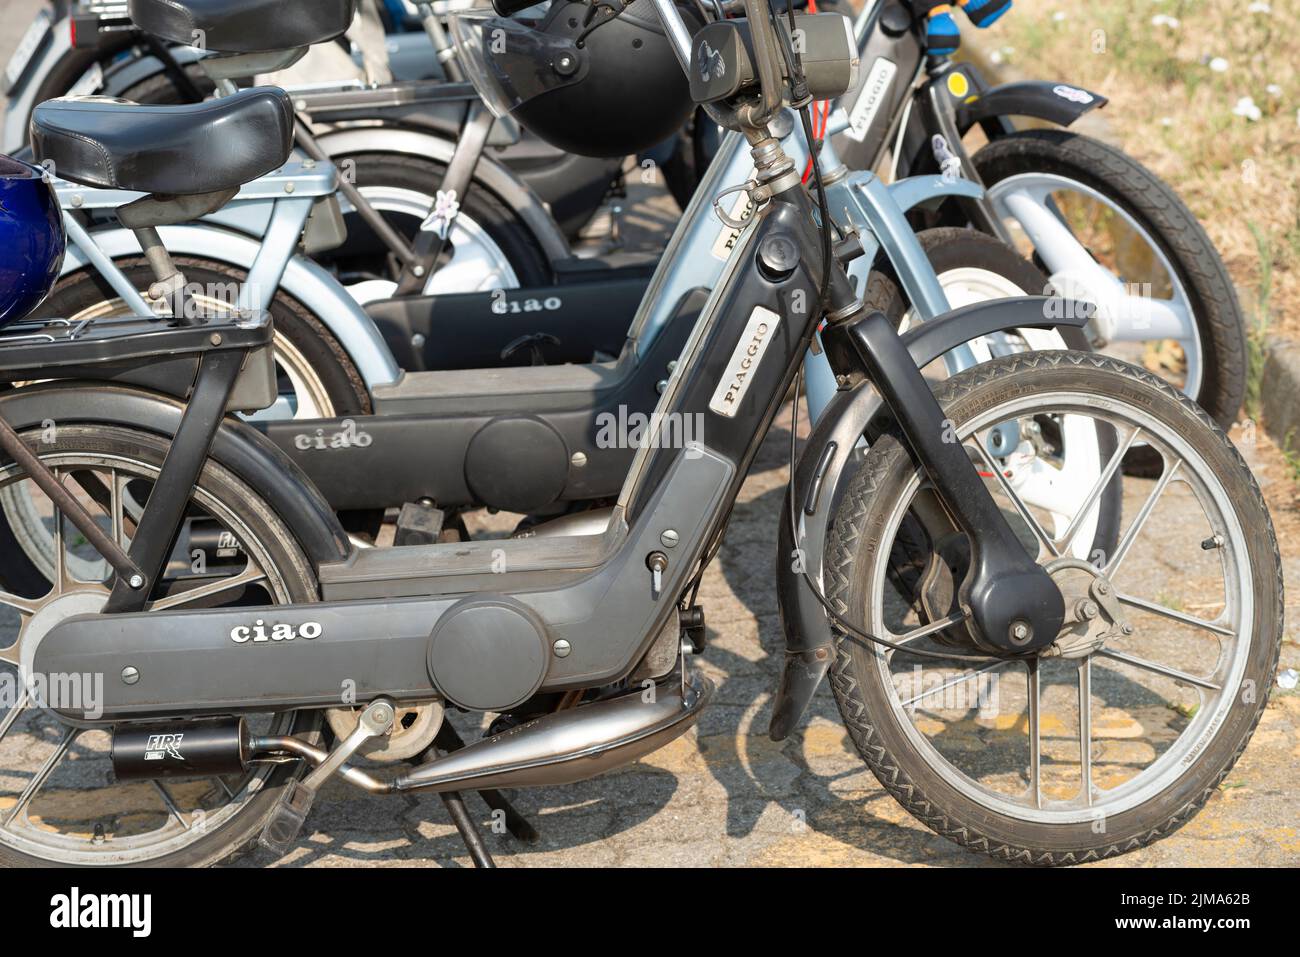 Italia, Lombardía, Reunión de motos antiguas, Piaggio Ciao Moped Foto de stock